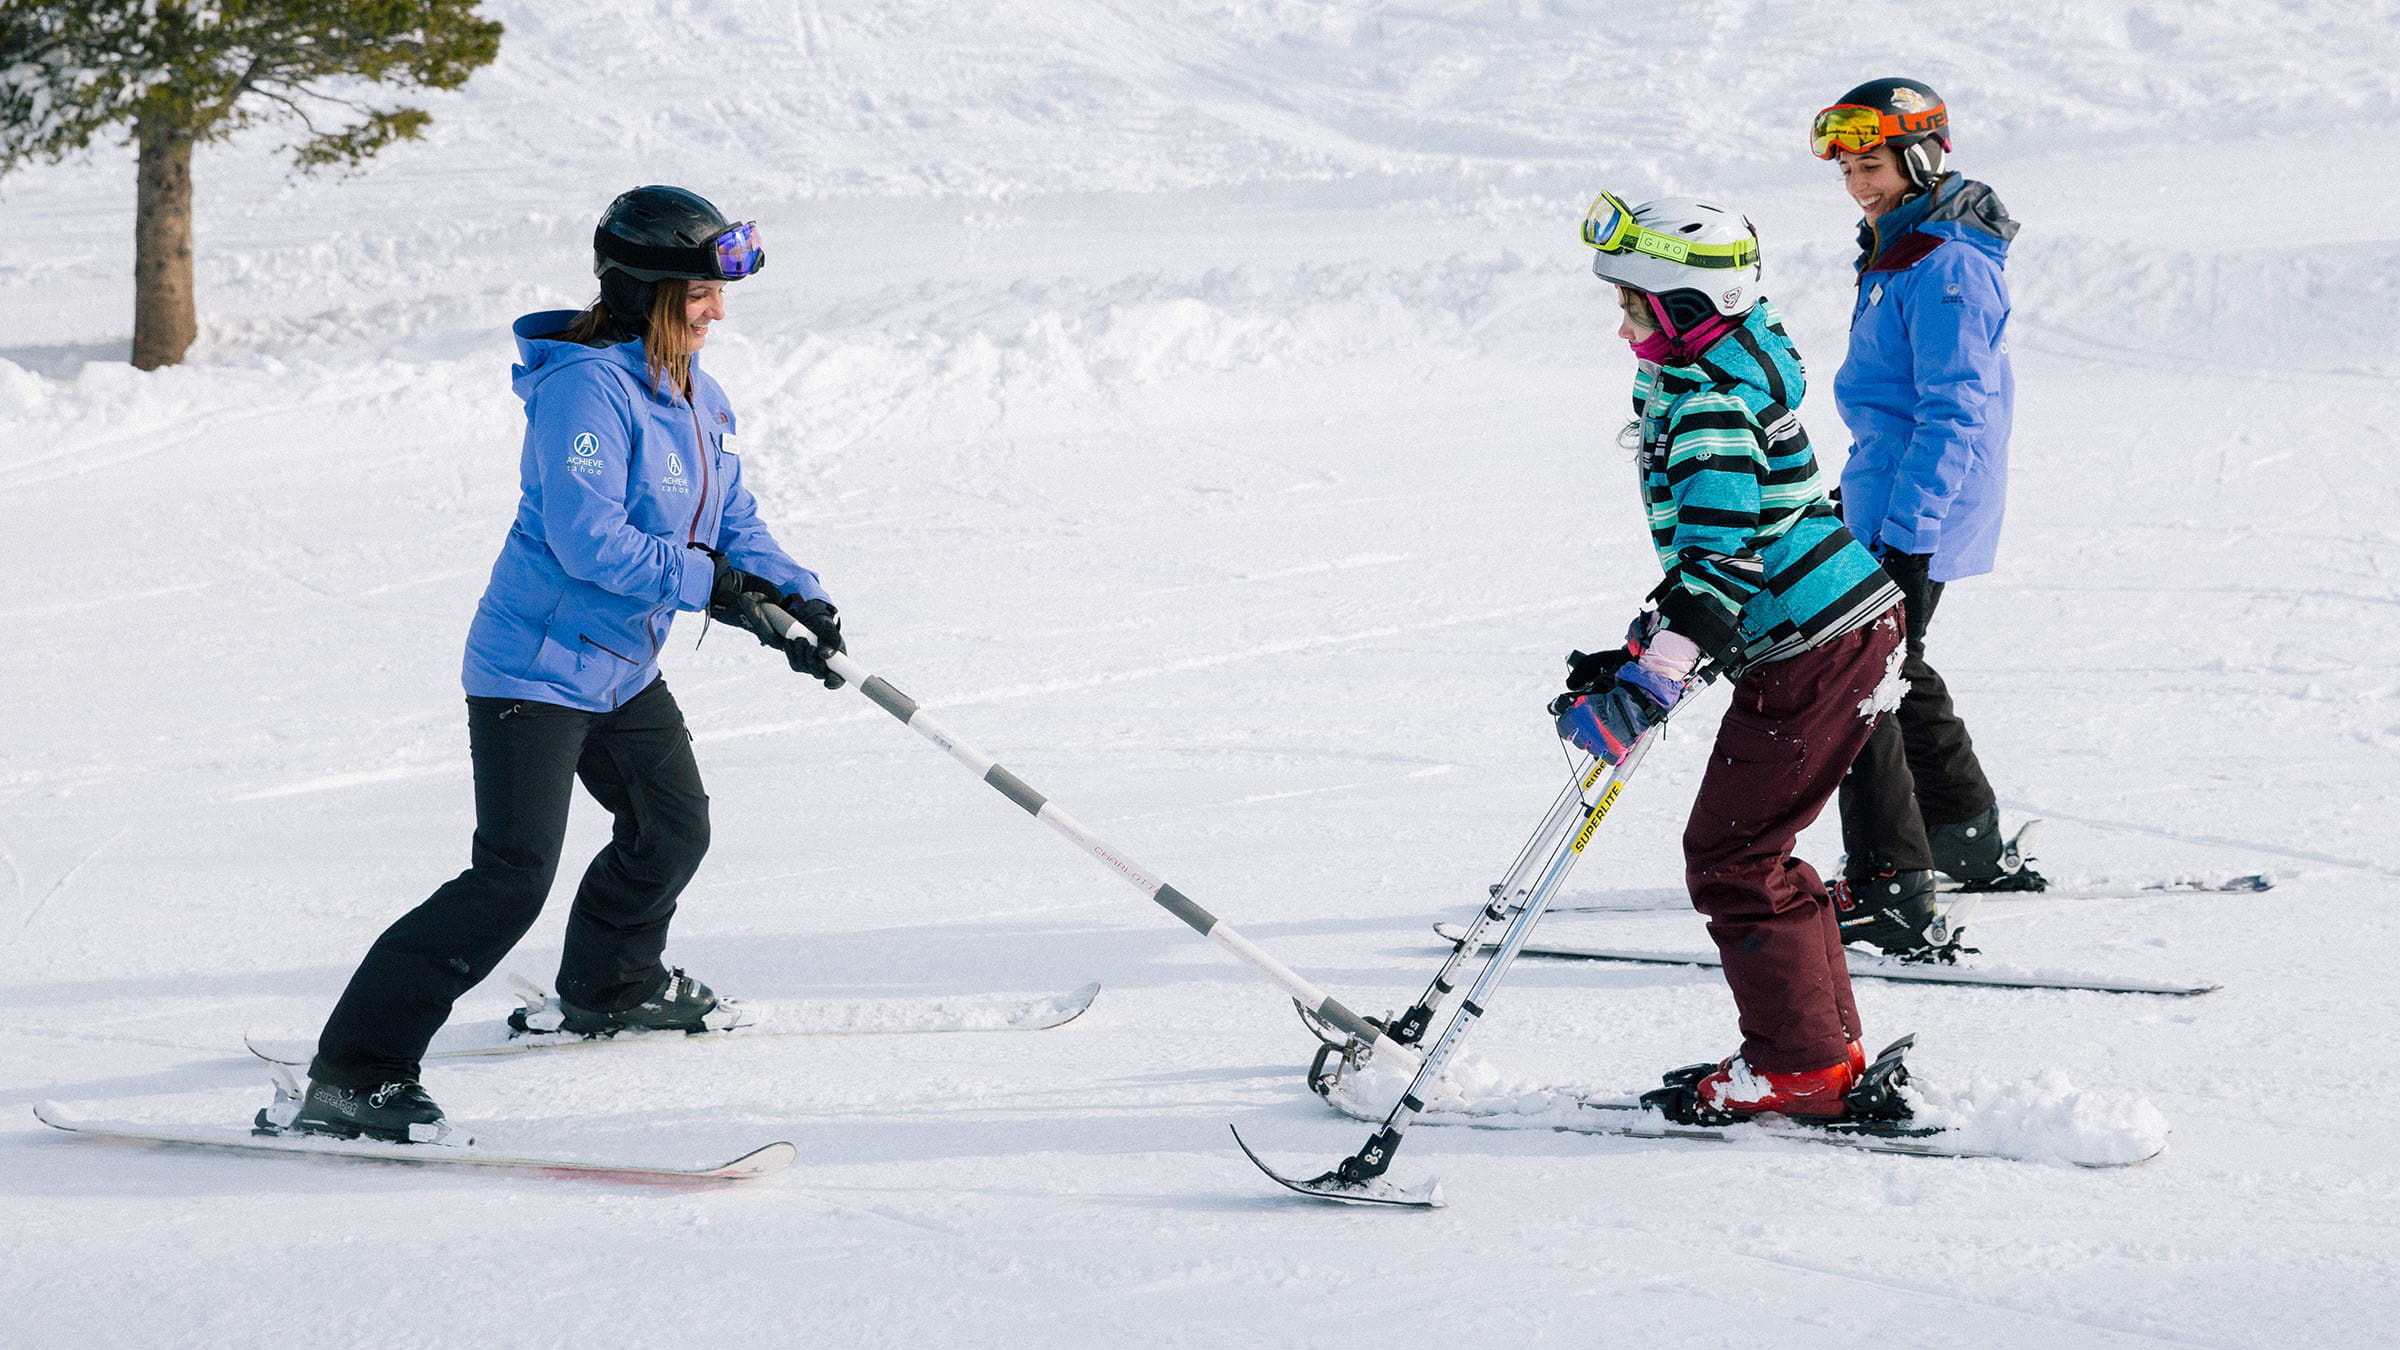 Achieve Tahoe adaptive ski school at Alpine Meadows